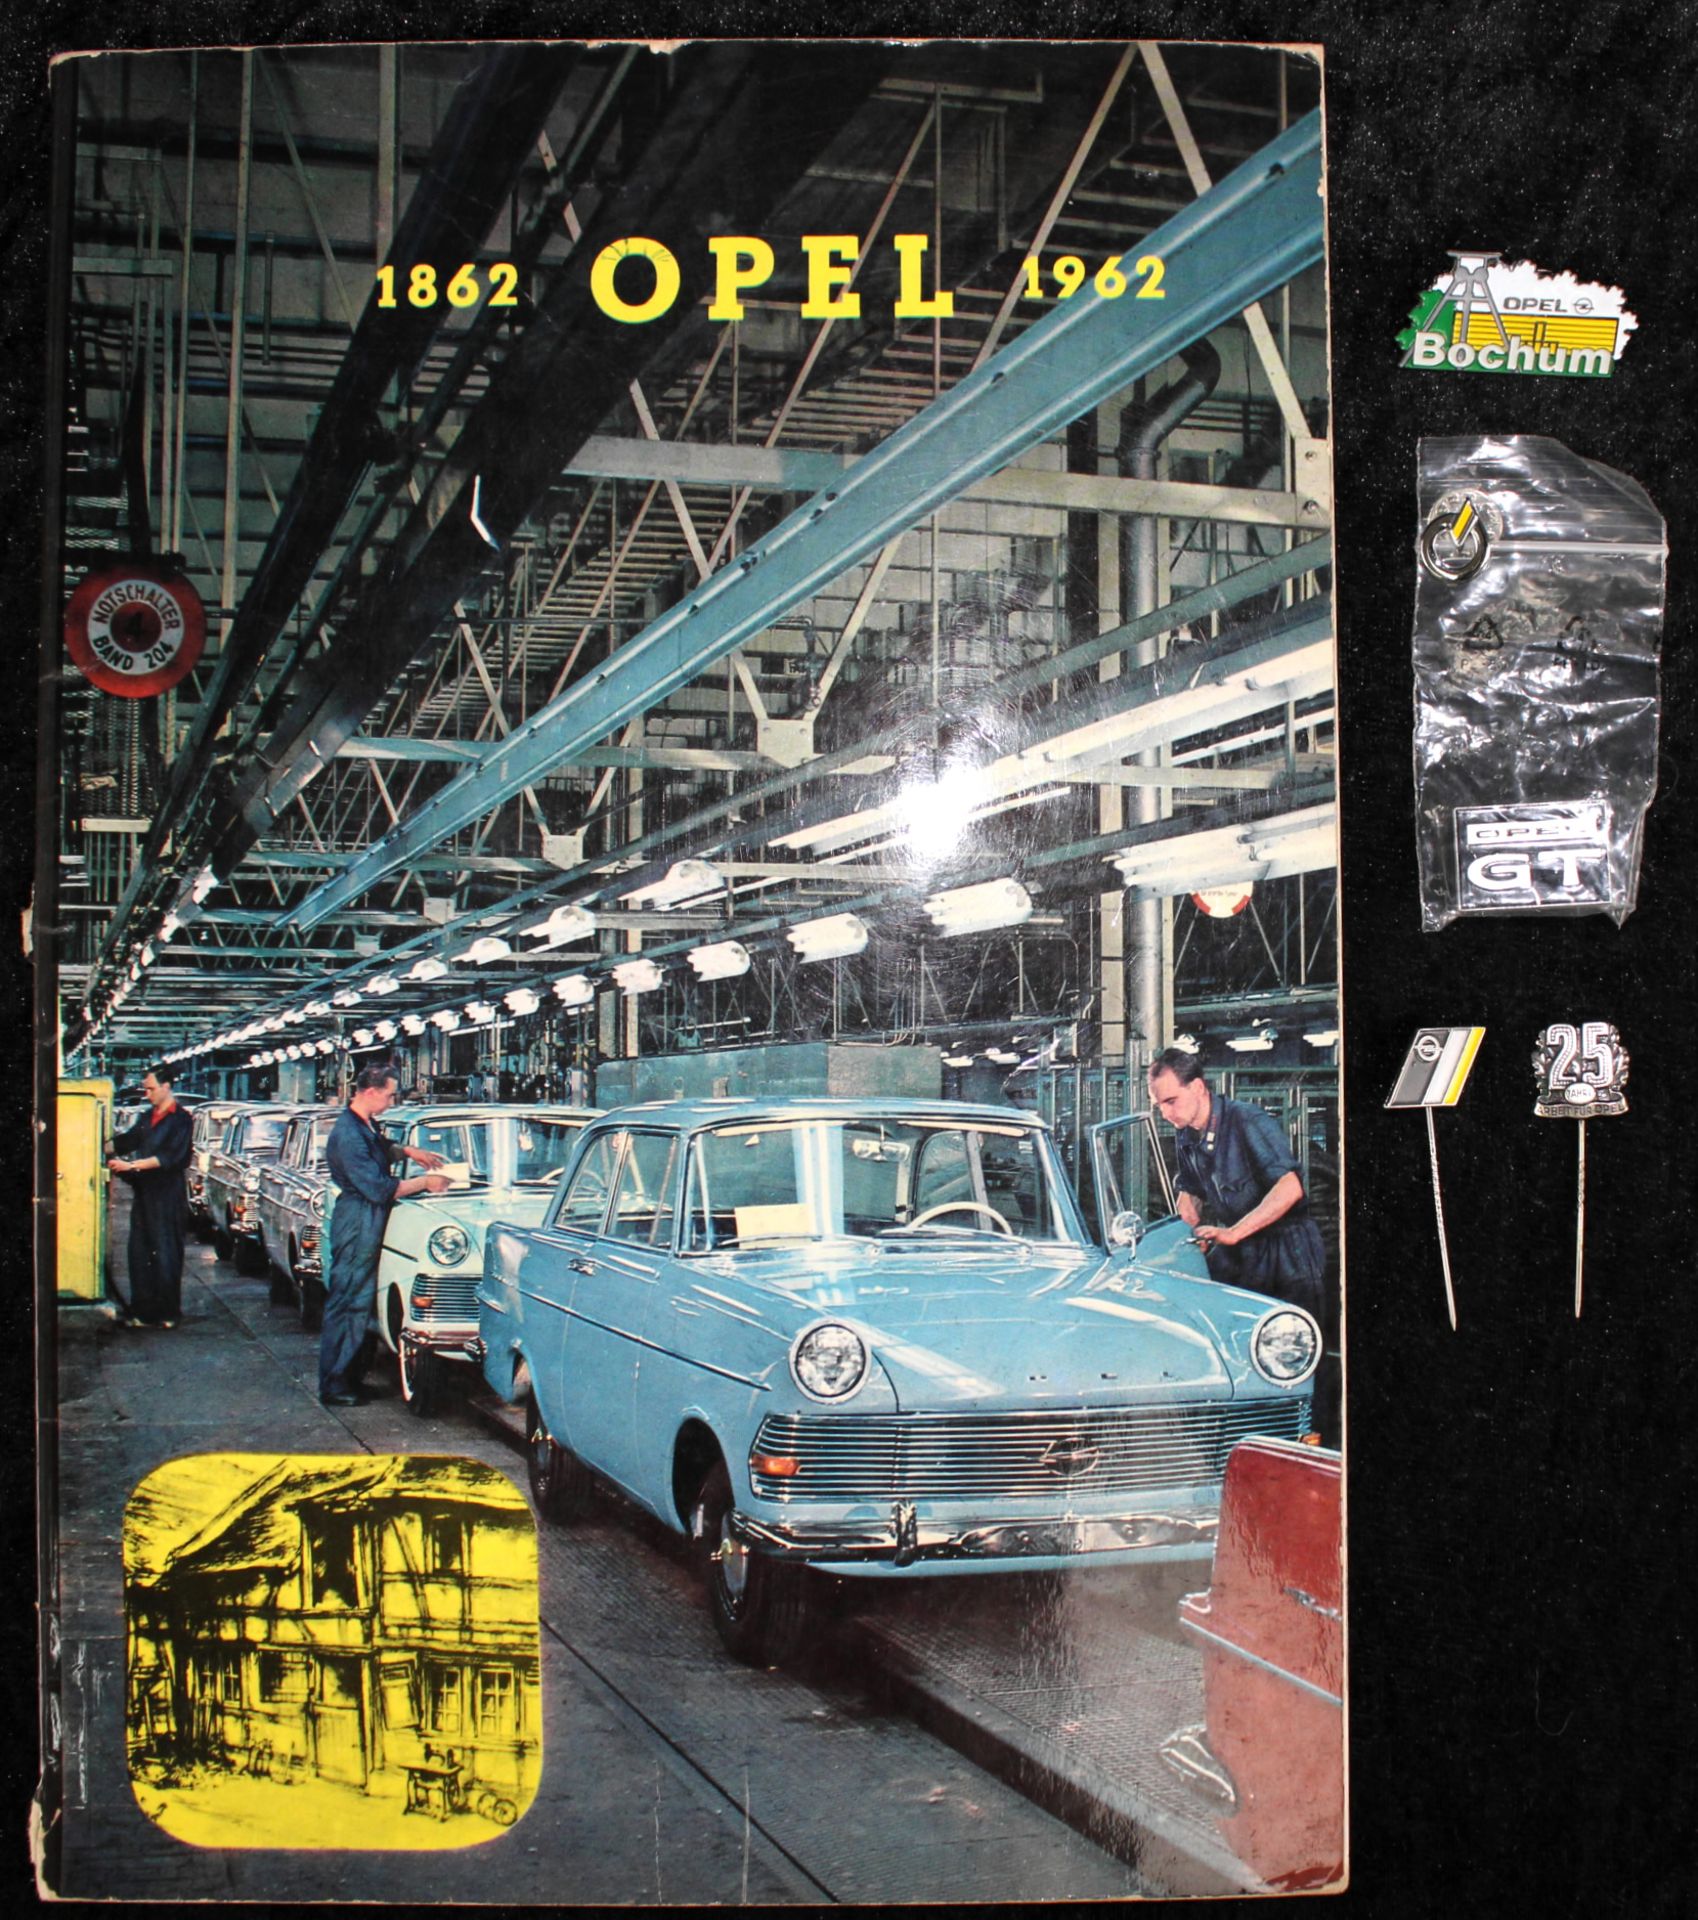 OPEL-Konvolut, 100 Jahre OPEL Jubiläumsheft 1962 und Knopflochdekorationen, Reversnadeln